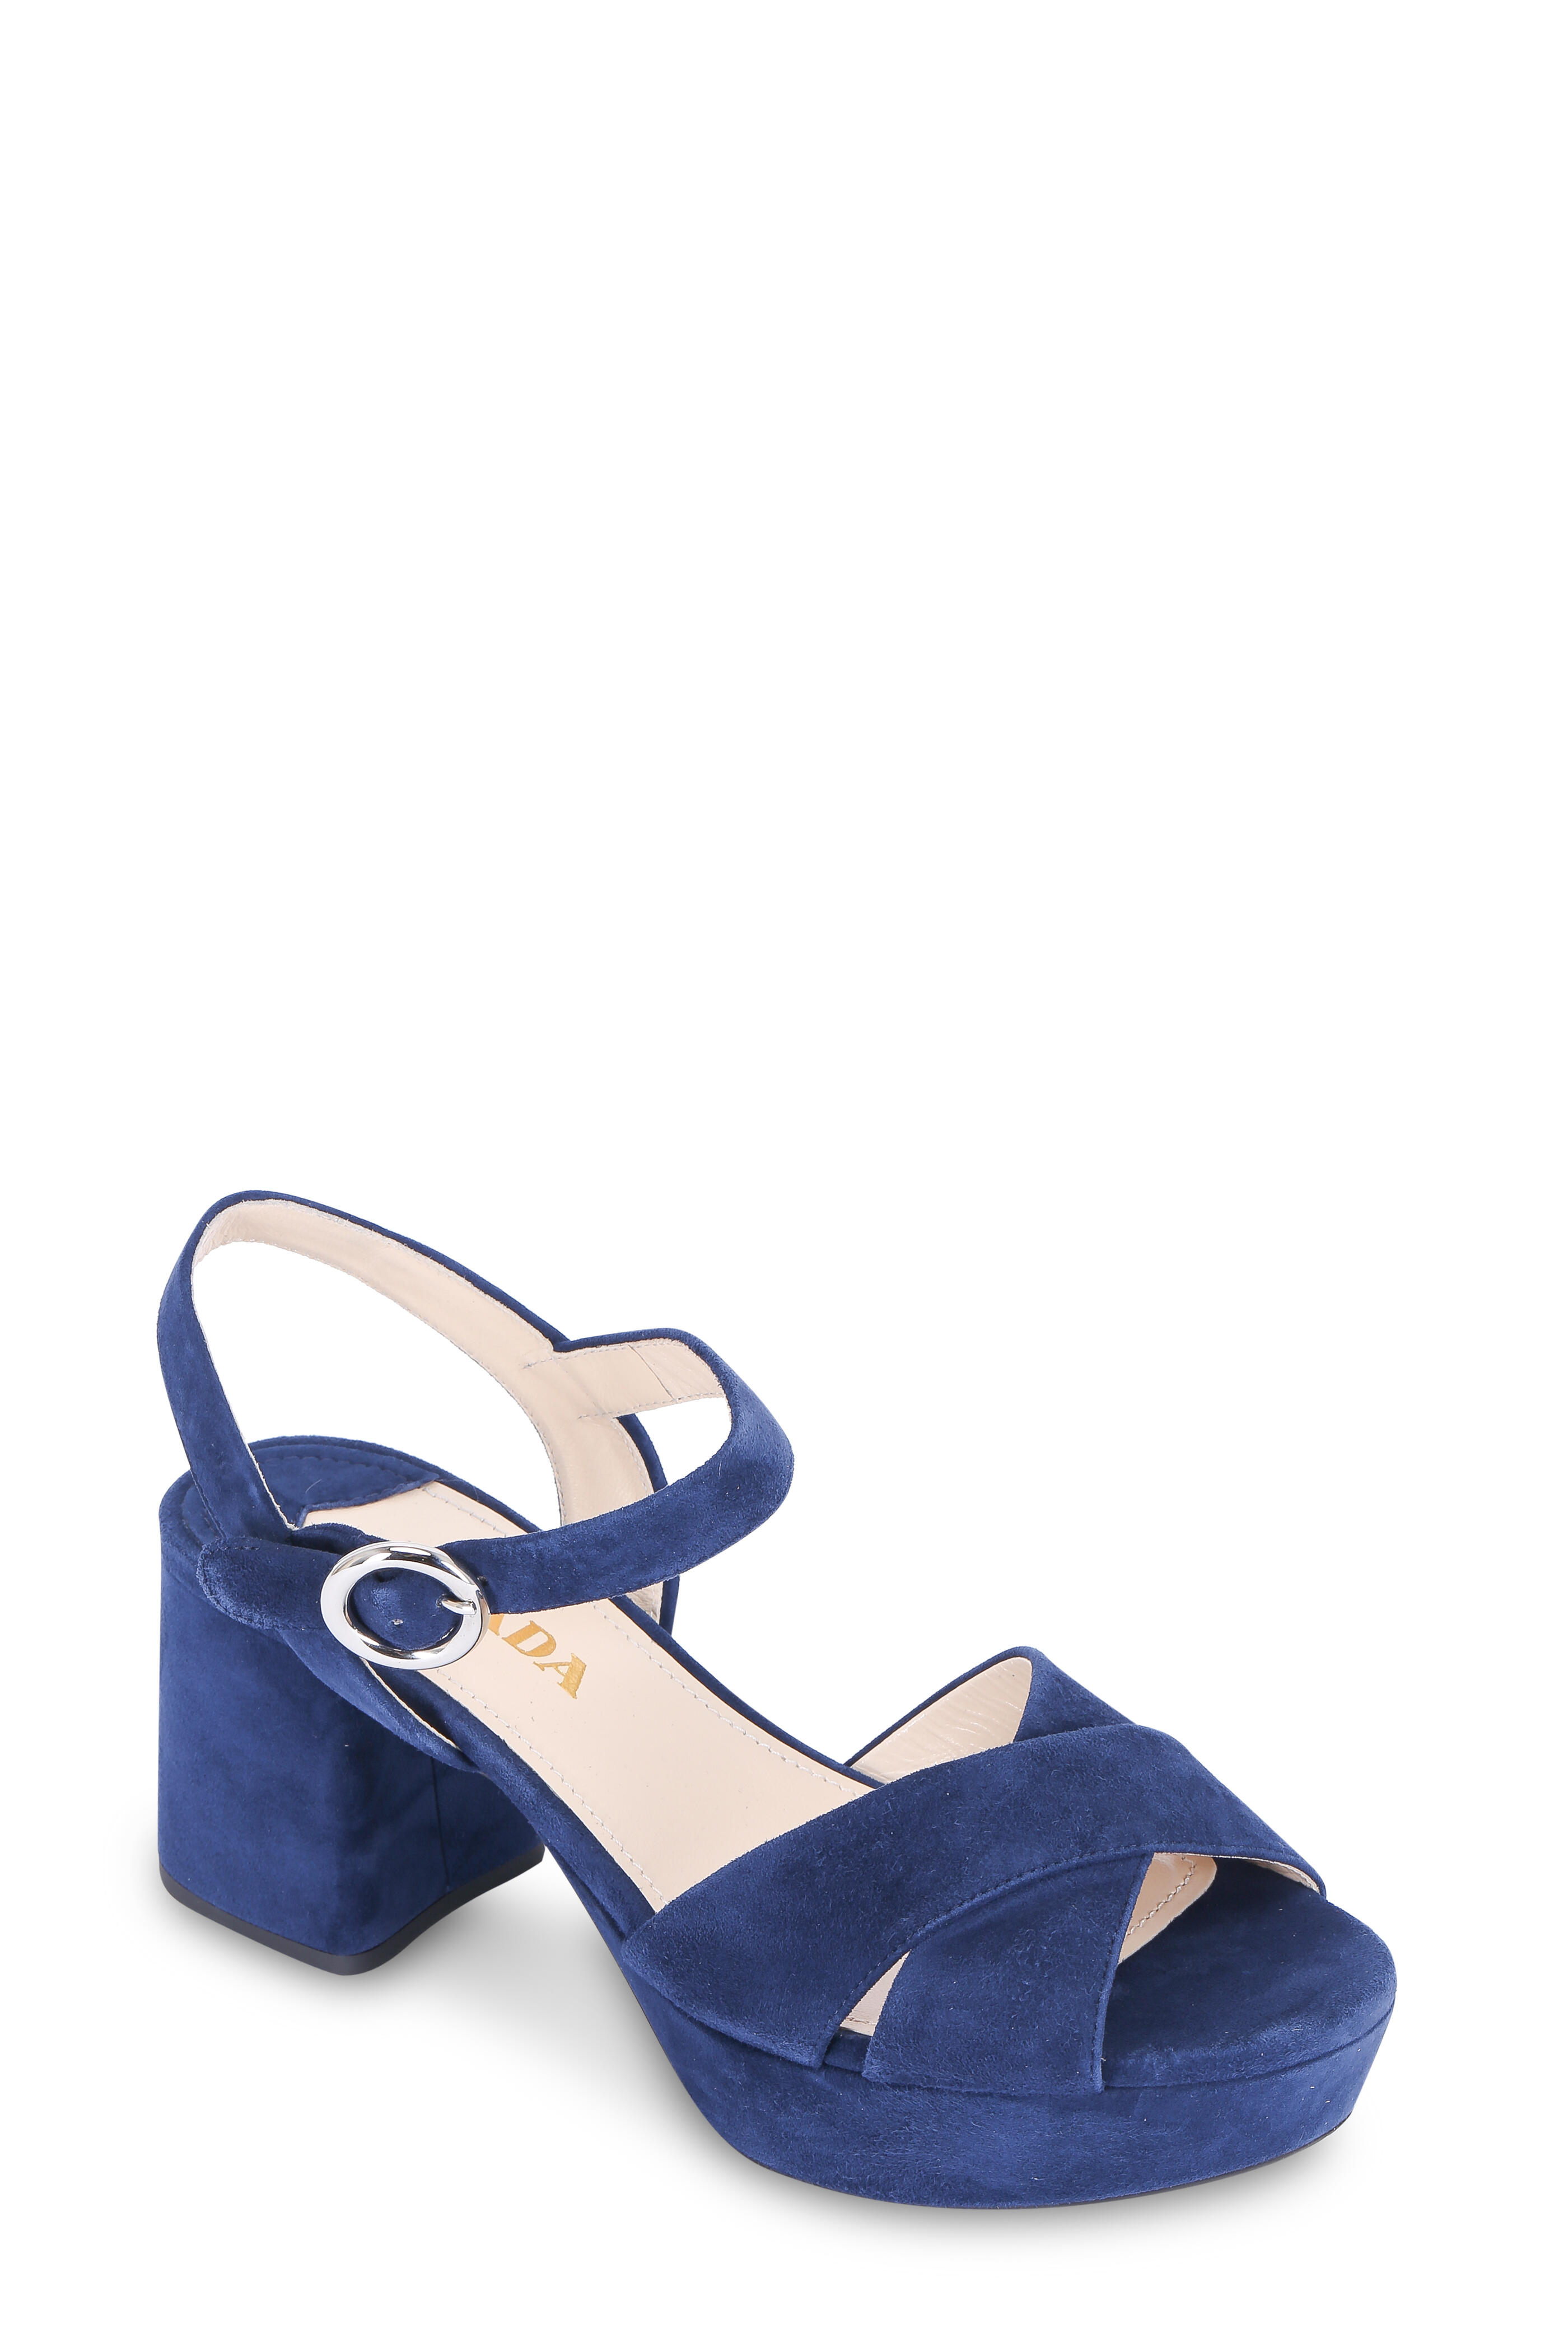 Sandals, suede look, navy blue, rhinestones, women's small sizes